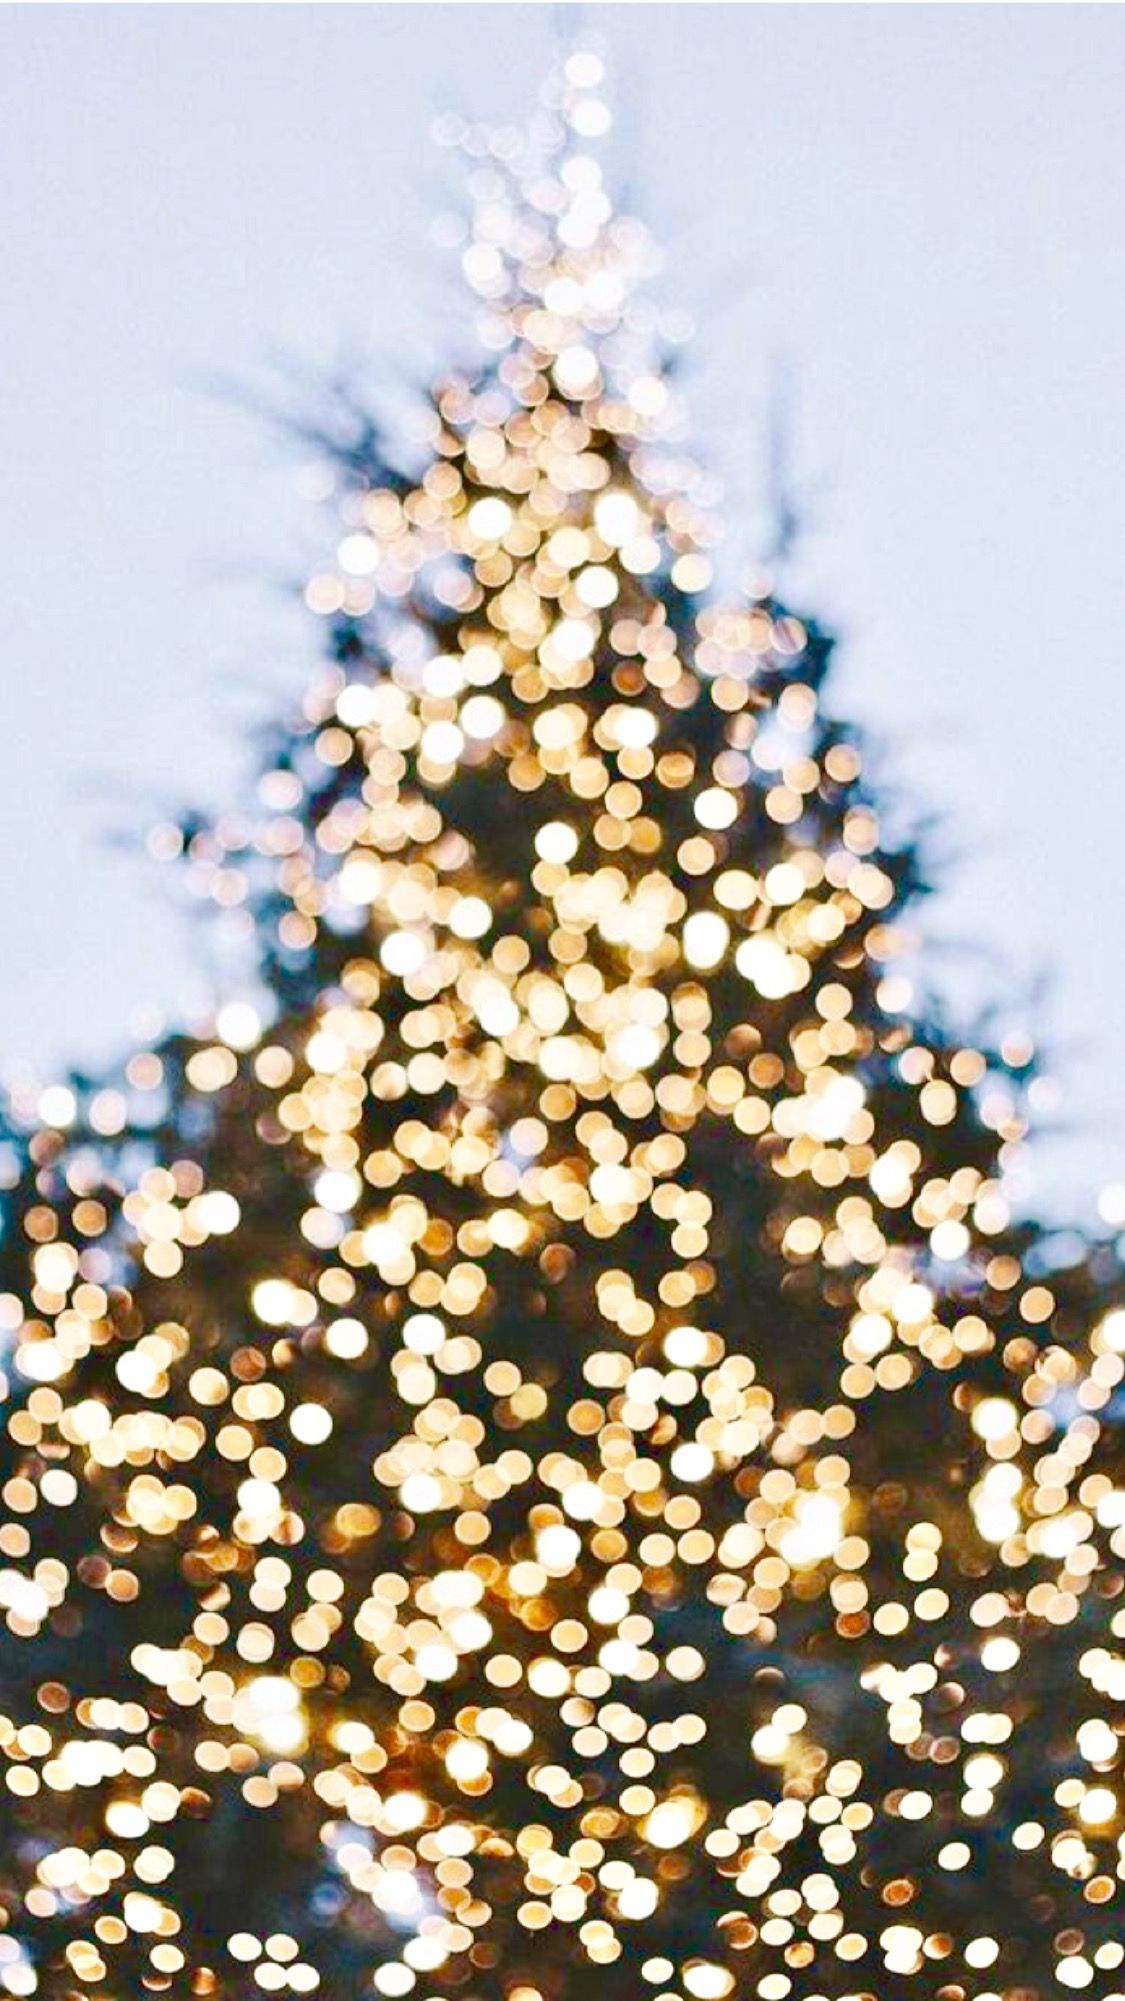 A christmas tree with lights on it - Christmas lights, white Christmas, fairy lights